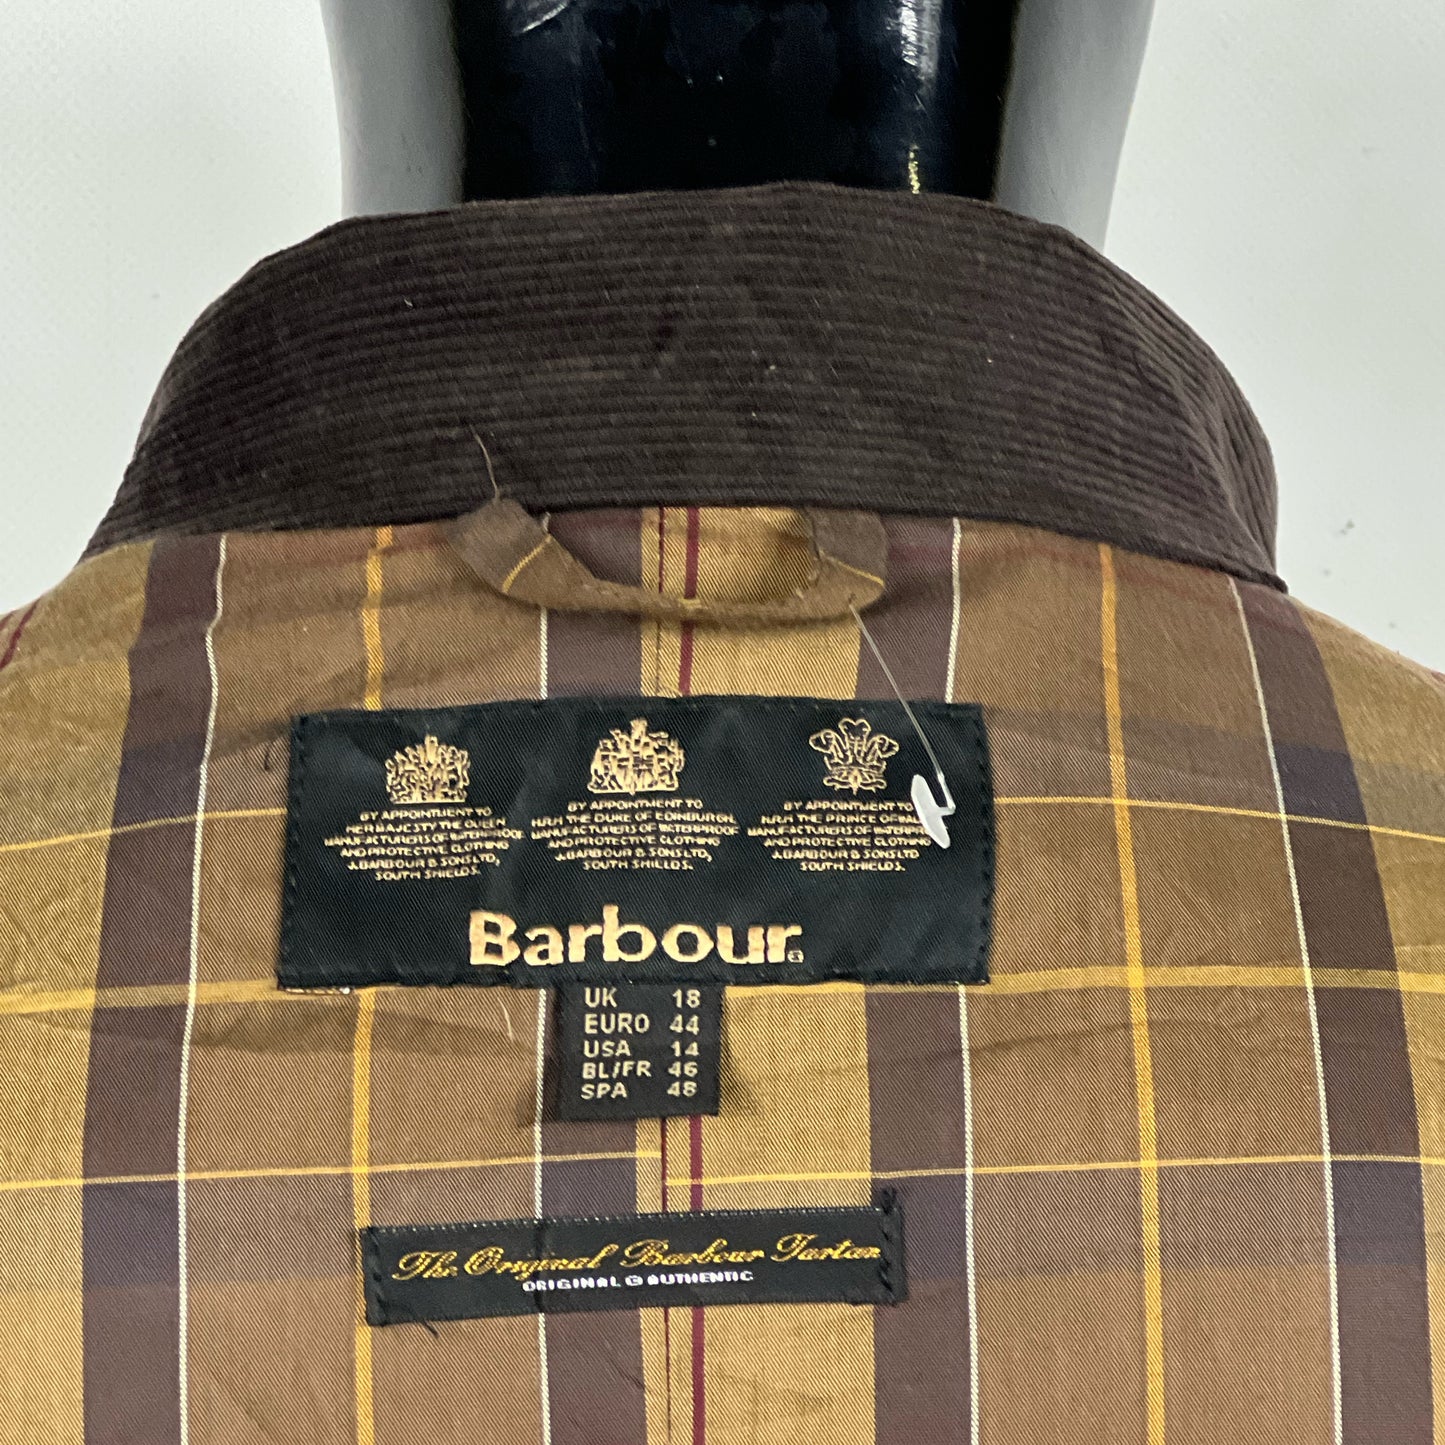 Giacca Barbour marrone corta leggera unisex UK18 Tg.46 Brown light wax Jacket UK18